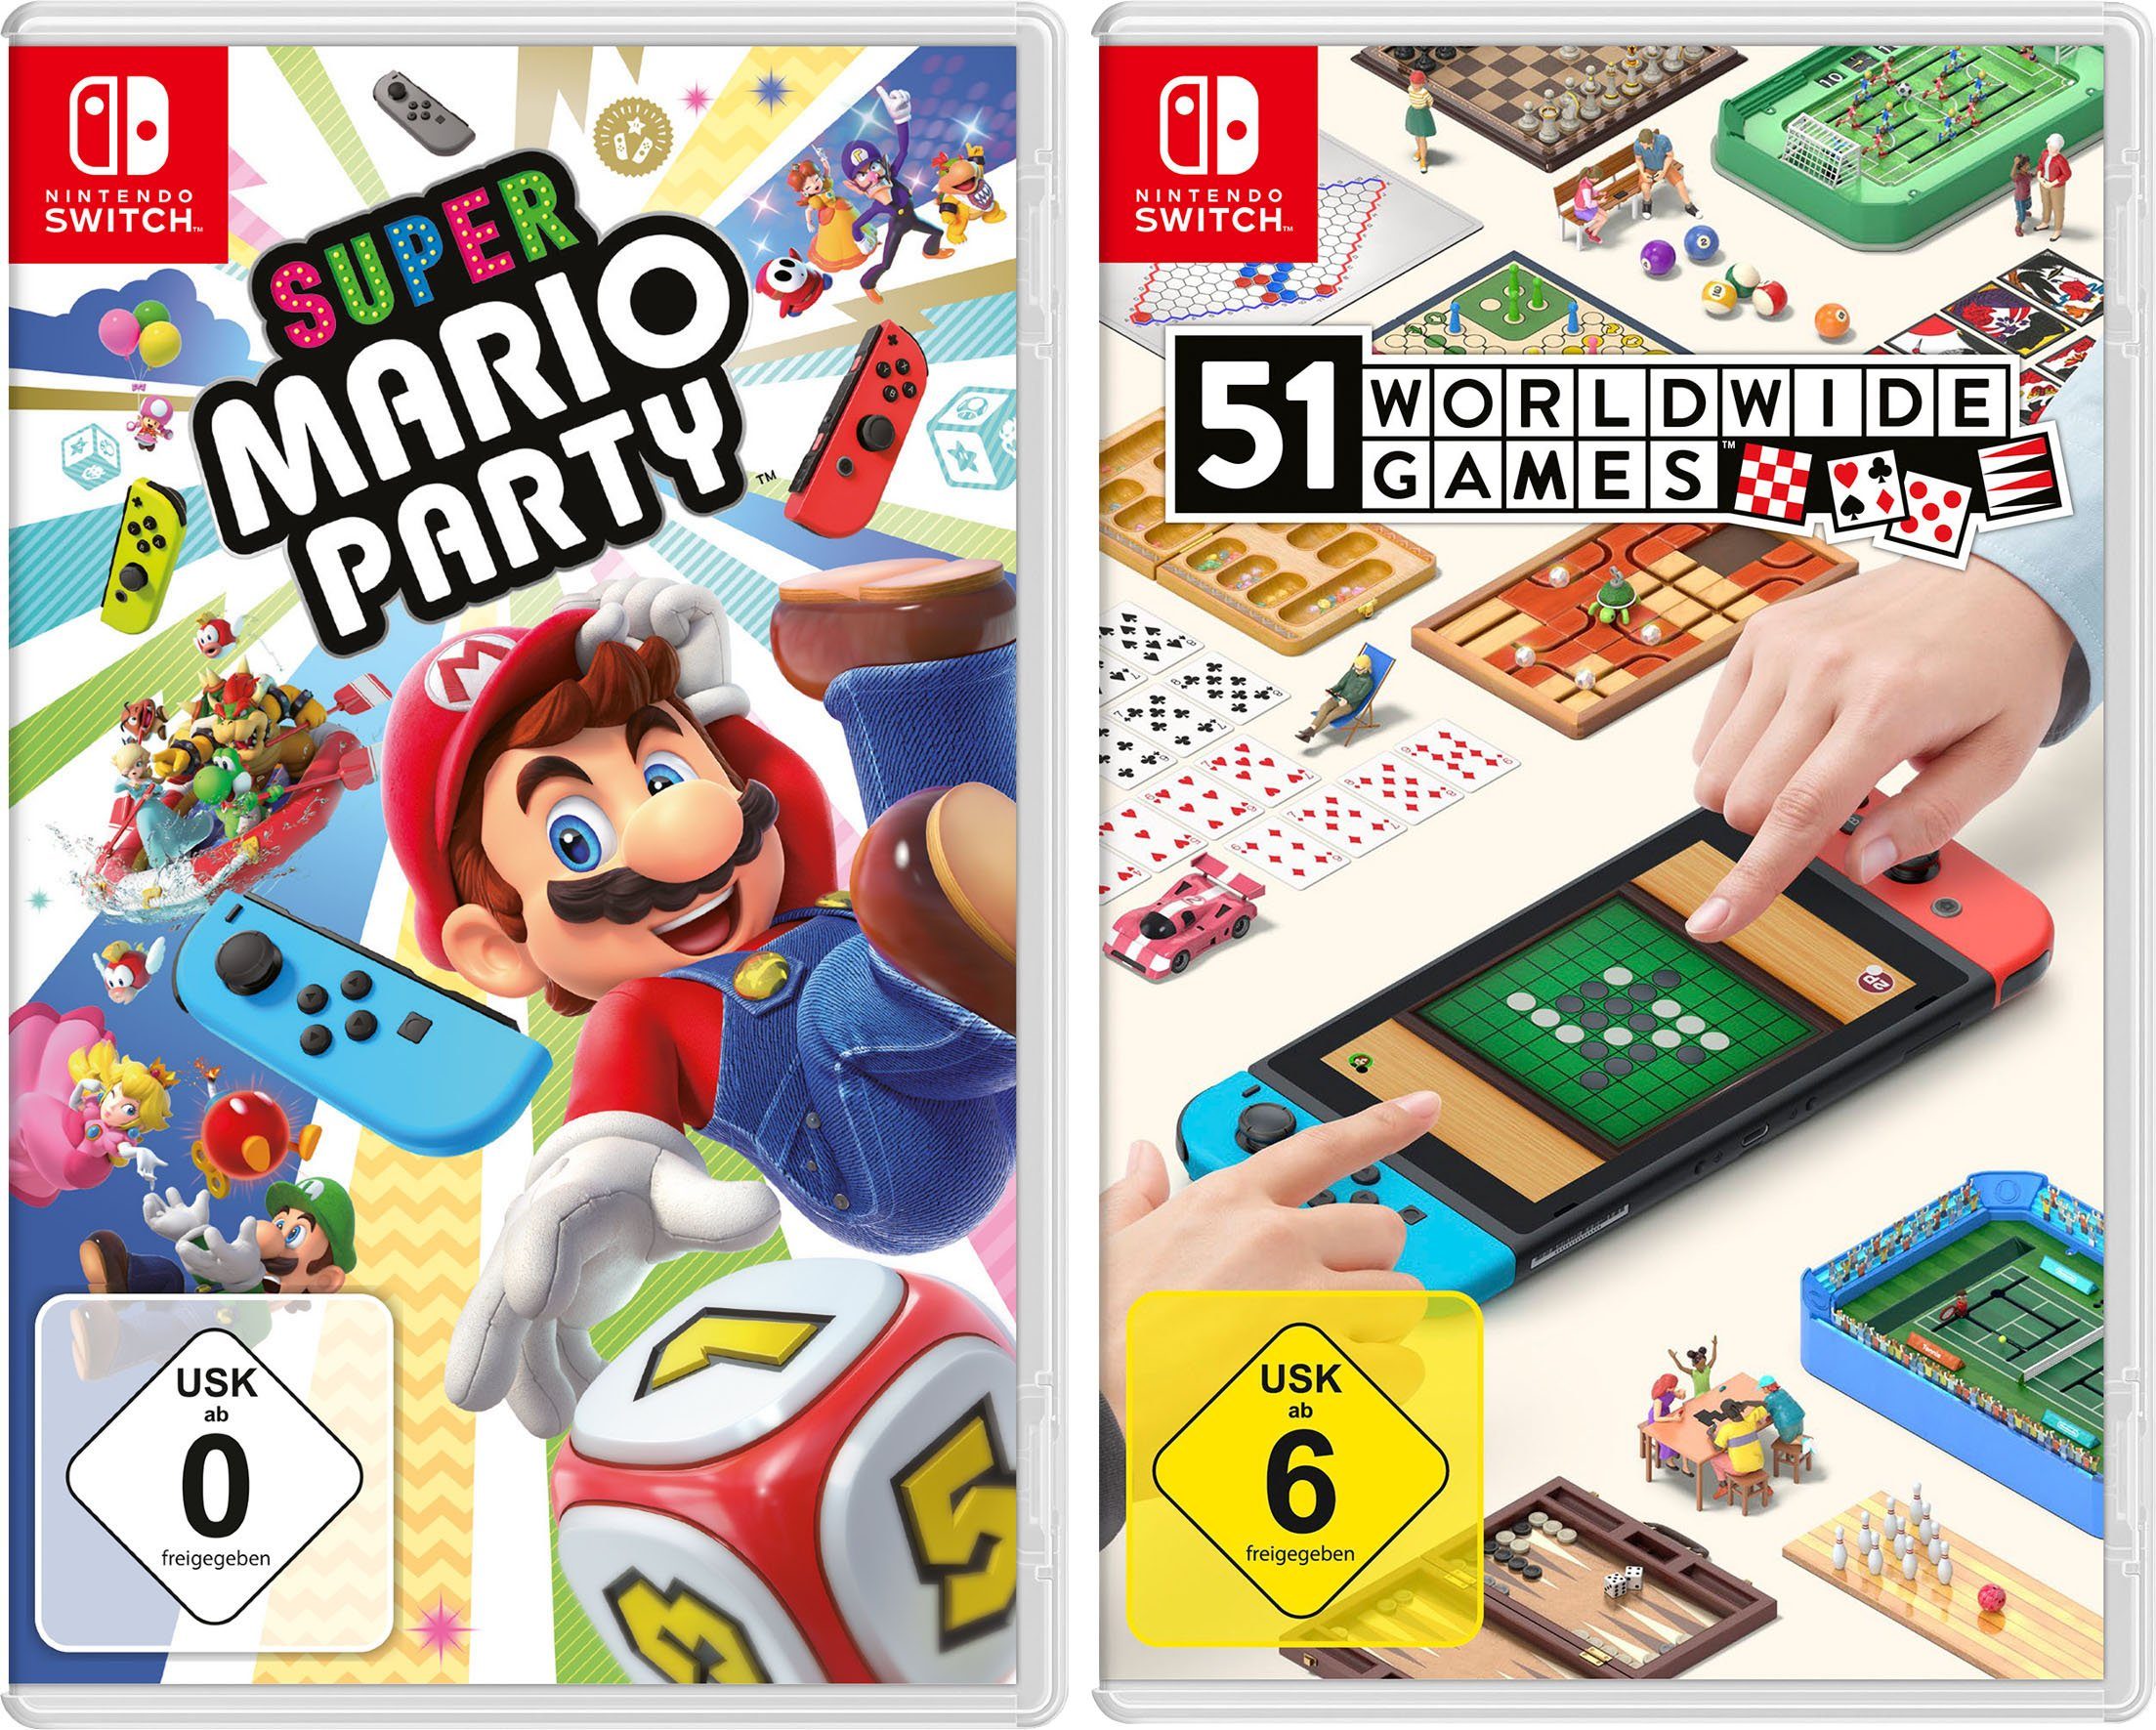 Super Mario Party + 51 Worldwide Games Nintendo Switch